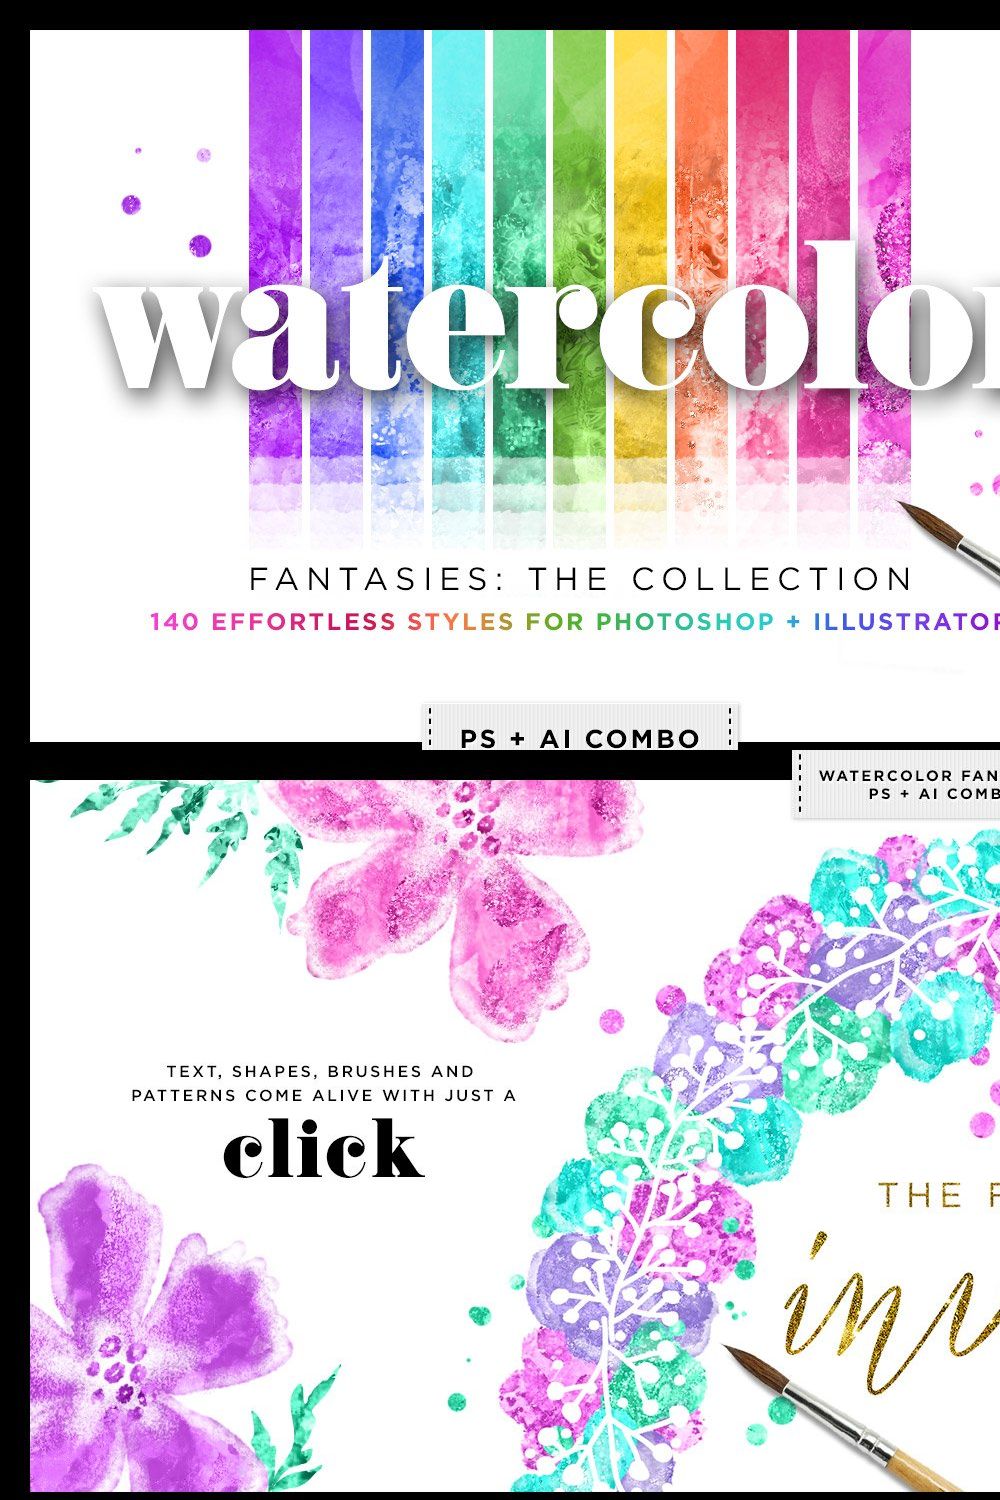 Watercolor & Glitter Styles Bundle pinterest preview image.